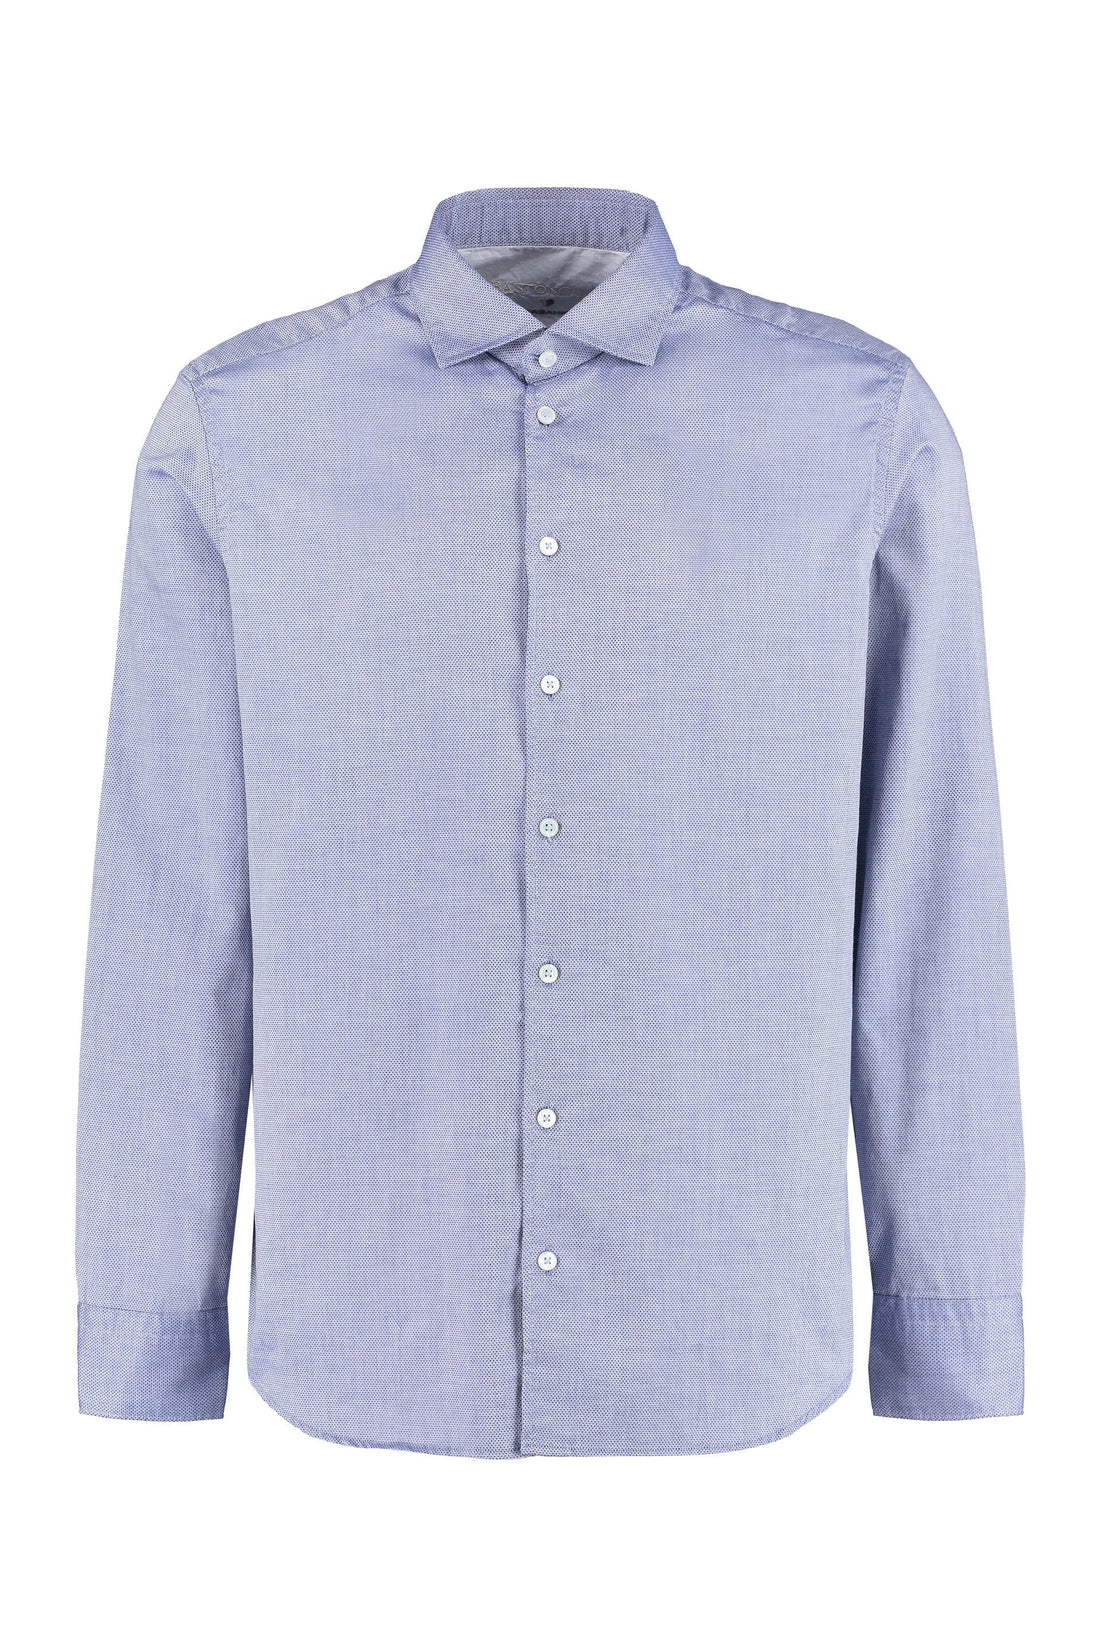 Piralo-OUTLET-SALE-Long sleeve stretch cotton shirt-ARCHIVIST